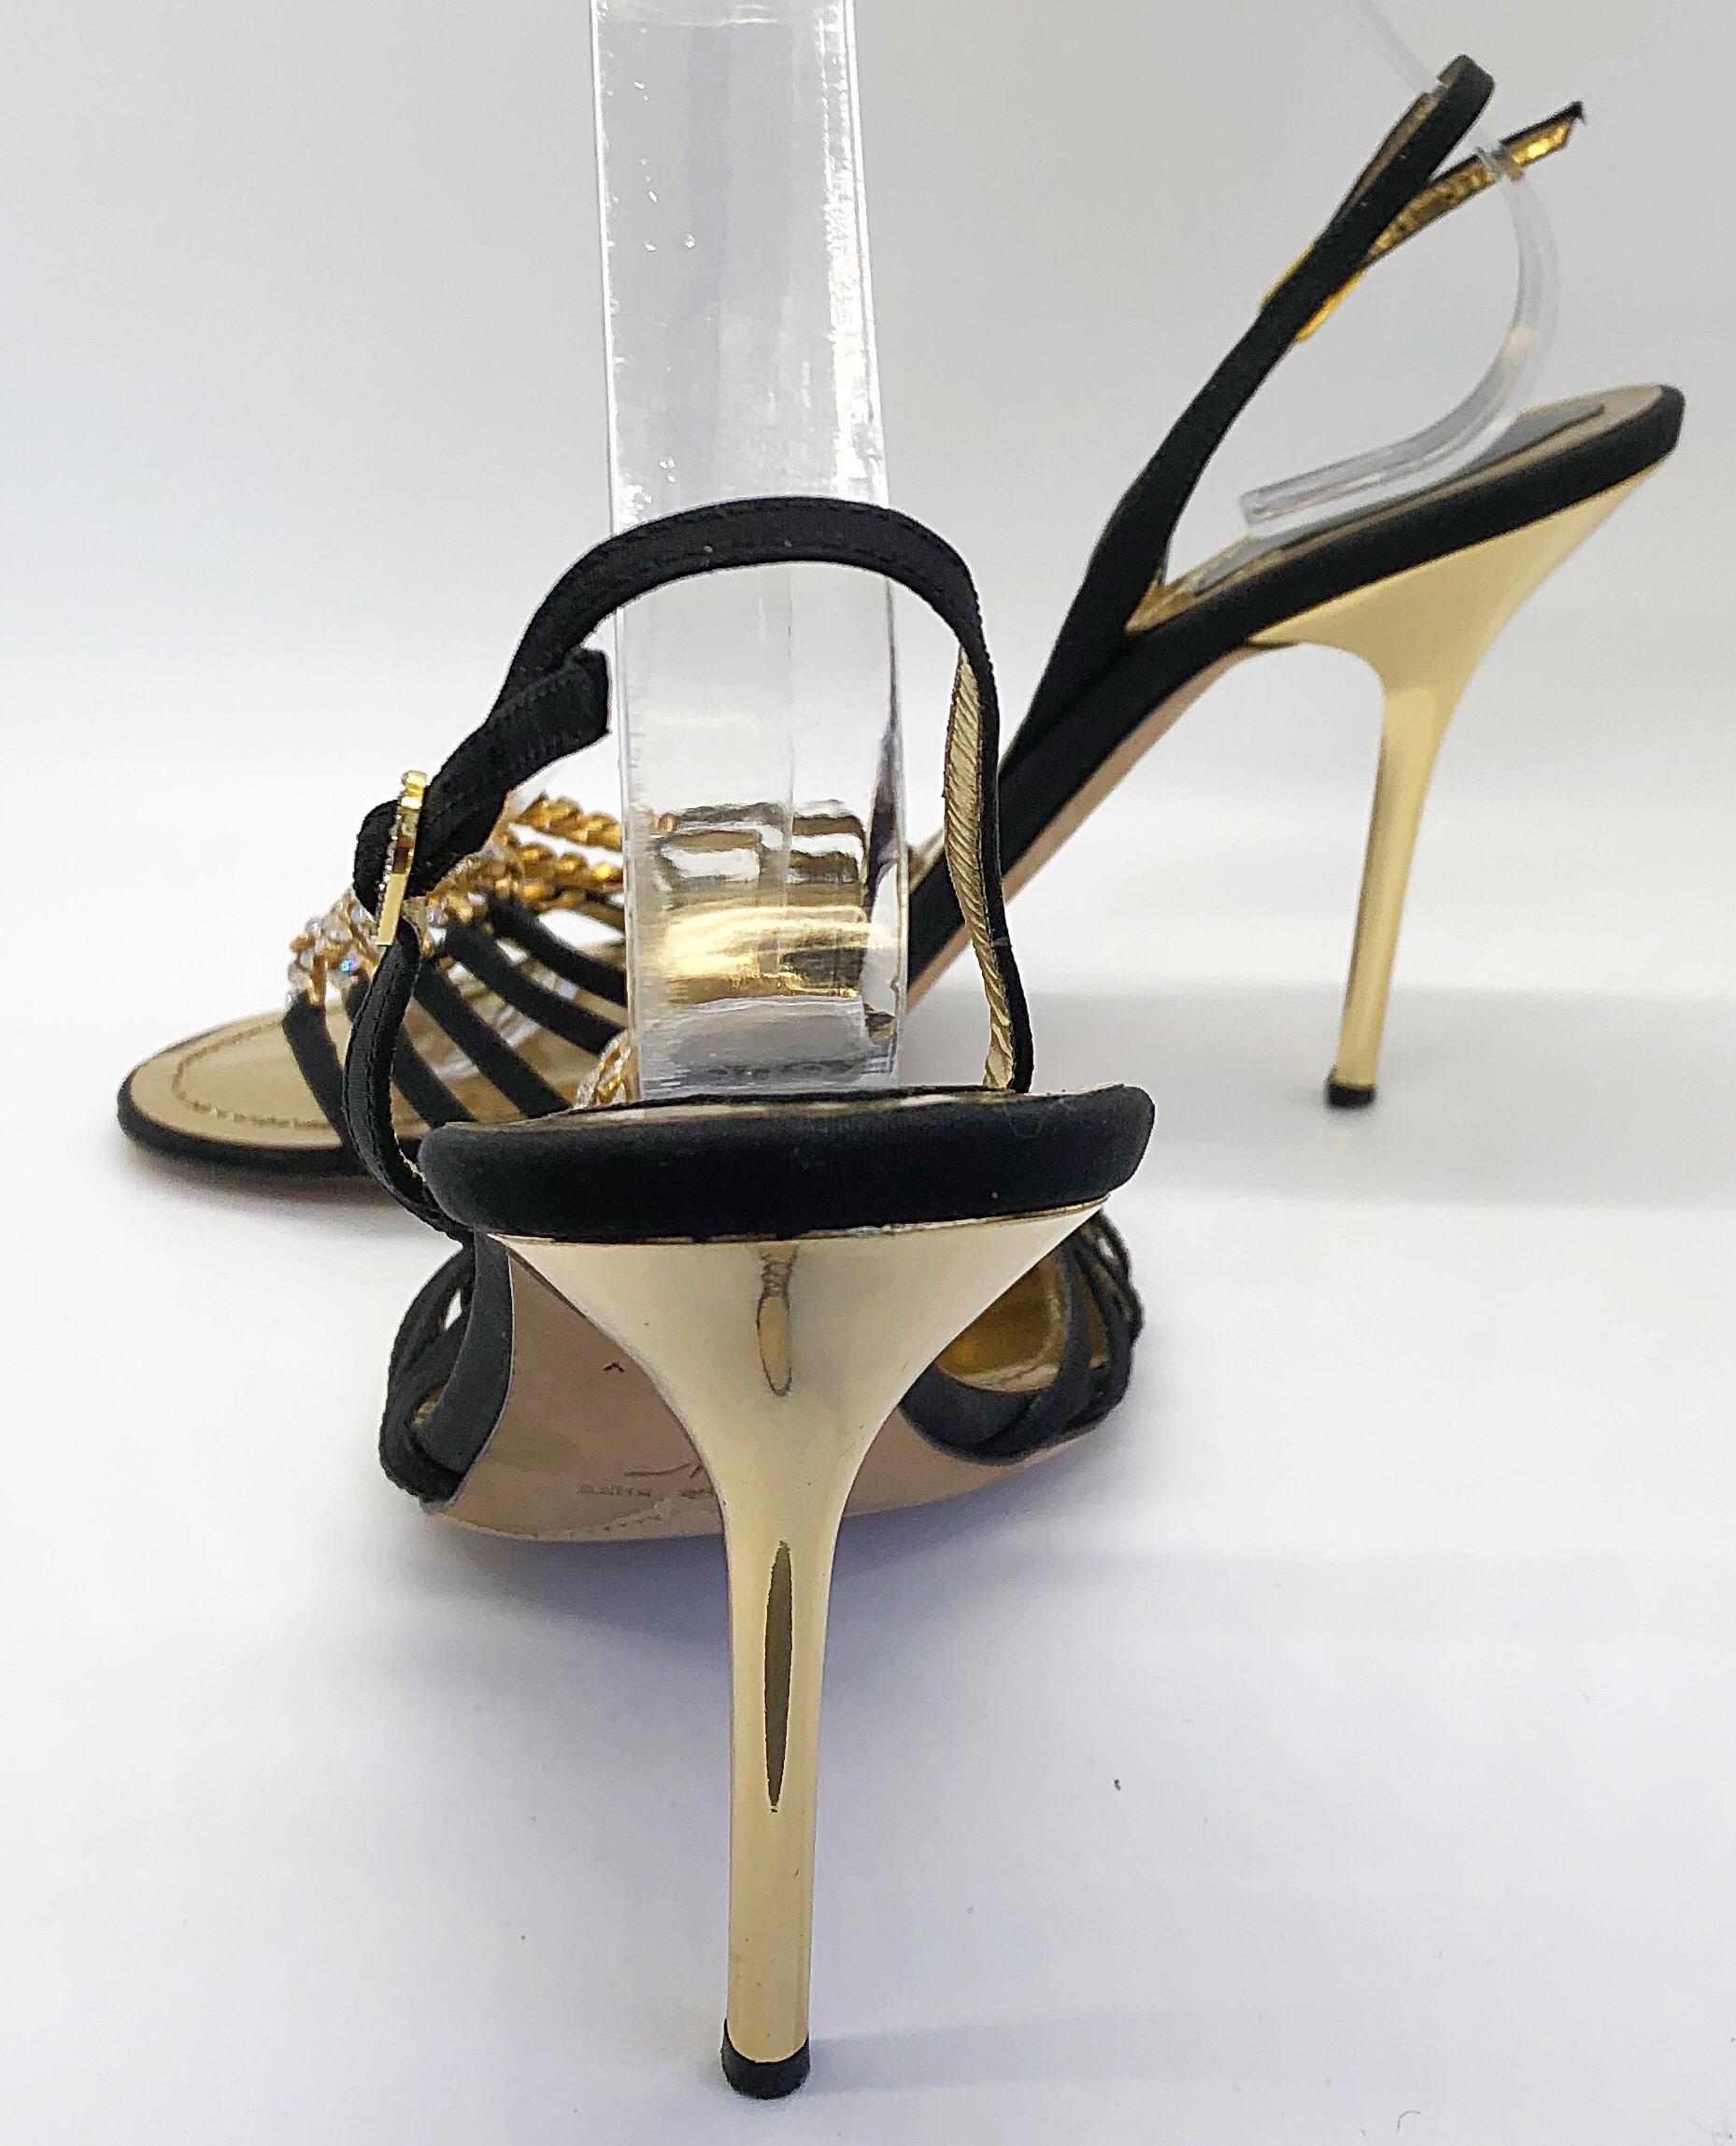 gold rhinestone heels